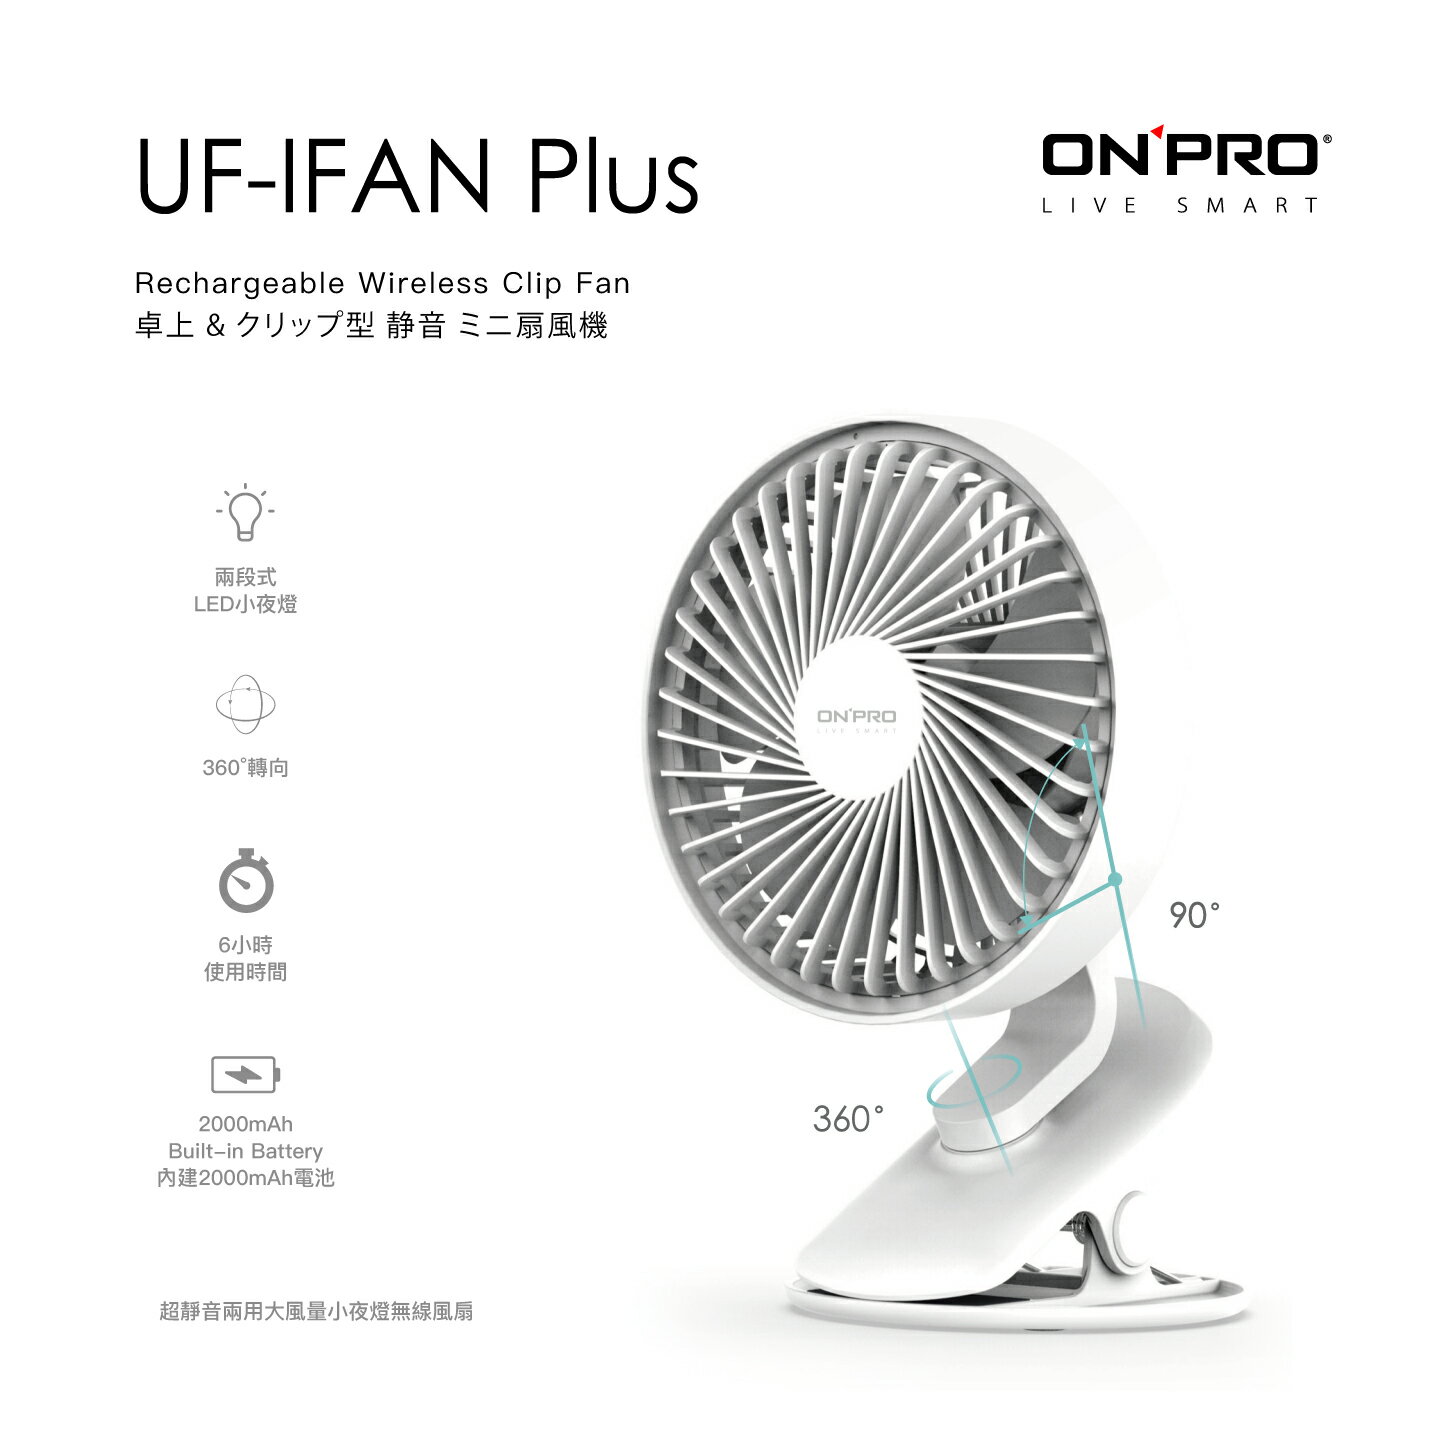 ONPRO UF-IFAN Plus 無線小夜燈涼風扇 / 4715219533466★衛立兒生活館★